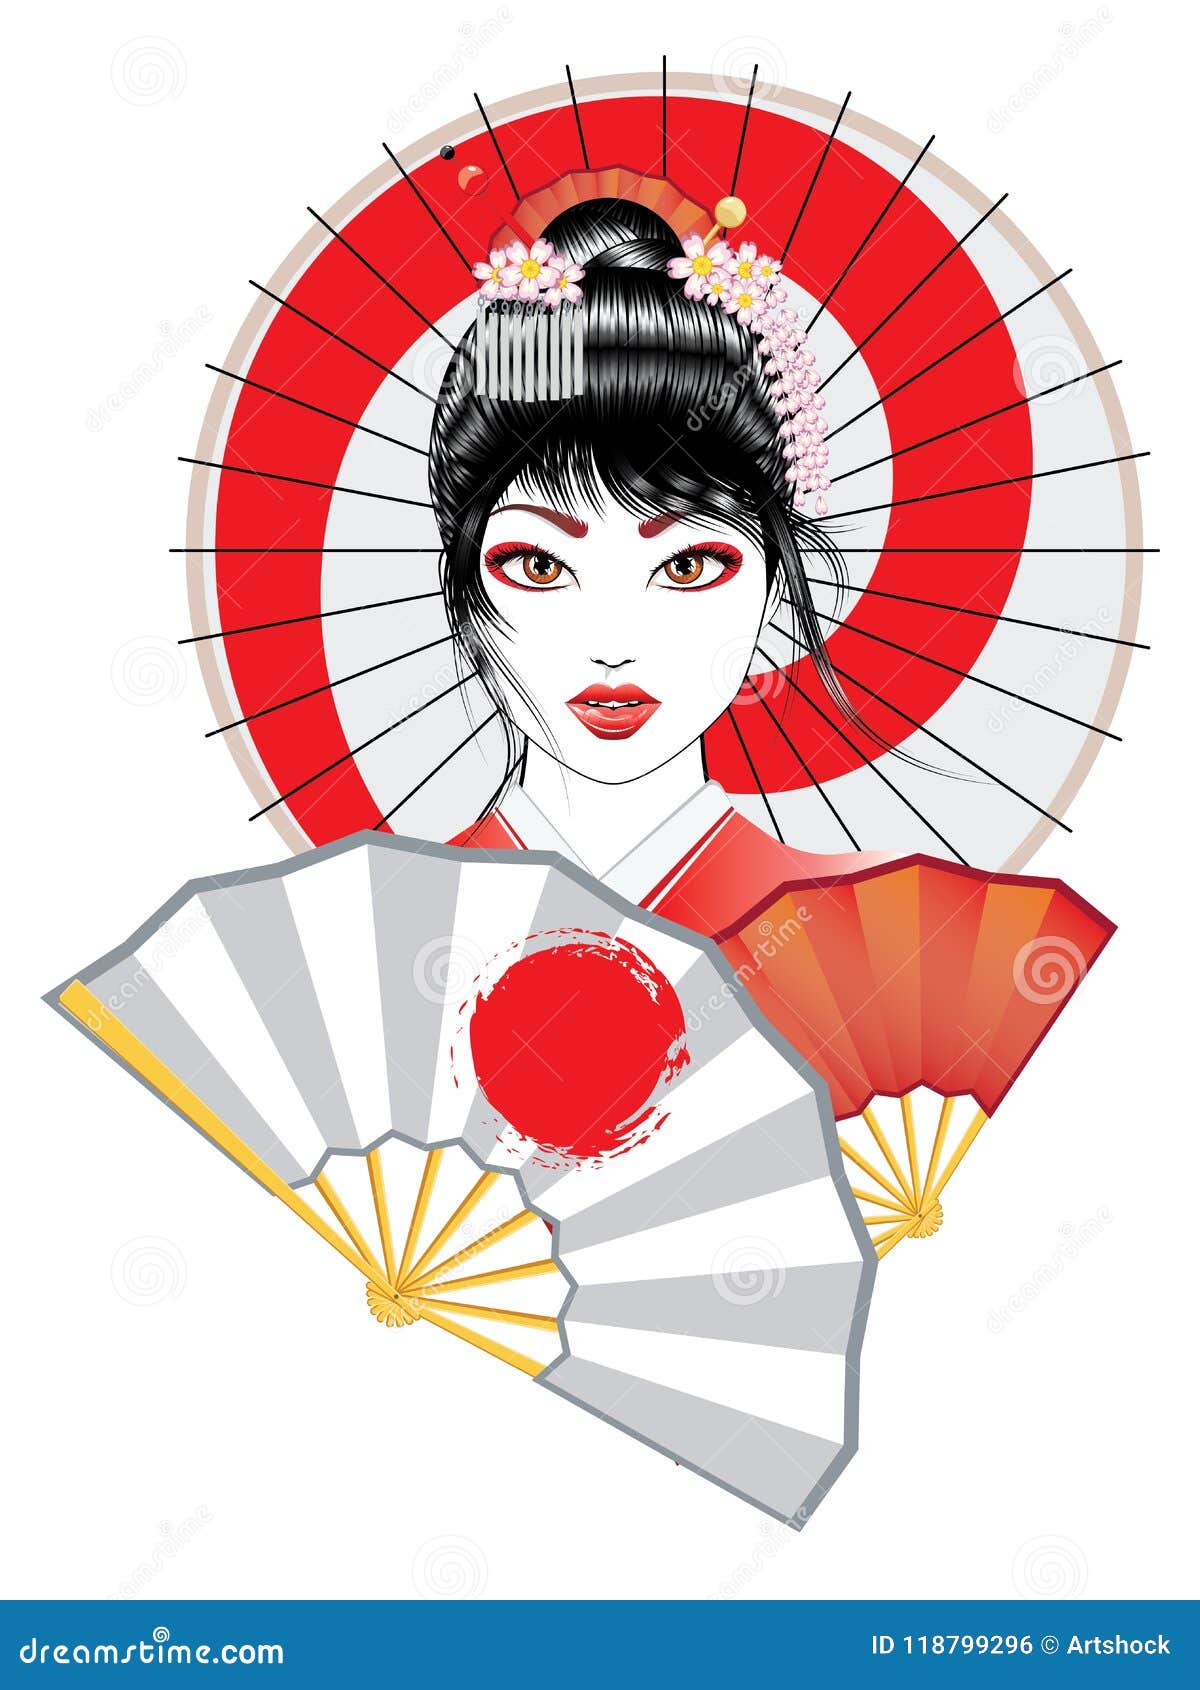 Geisha with Fan and Umbrella Stock Vector - Illustration of design ...